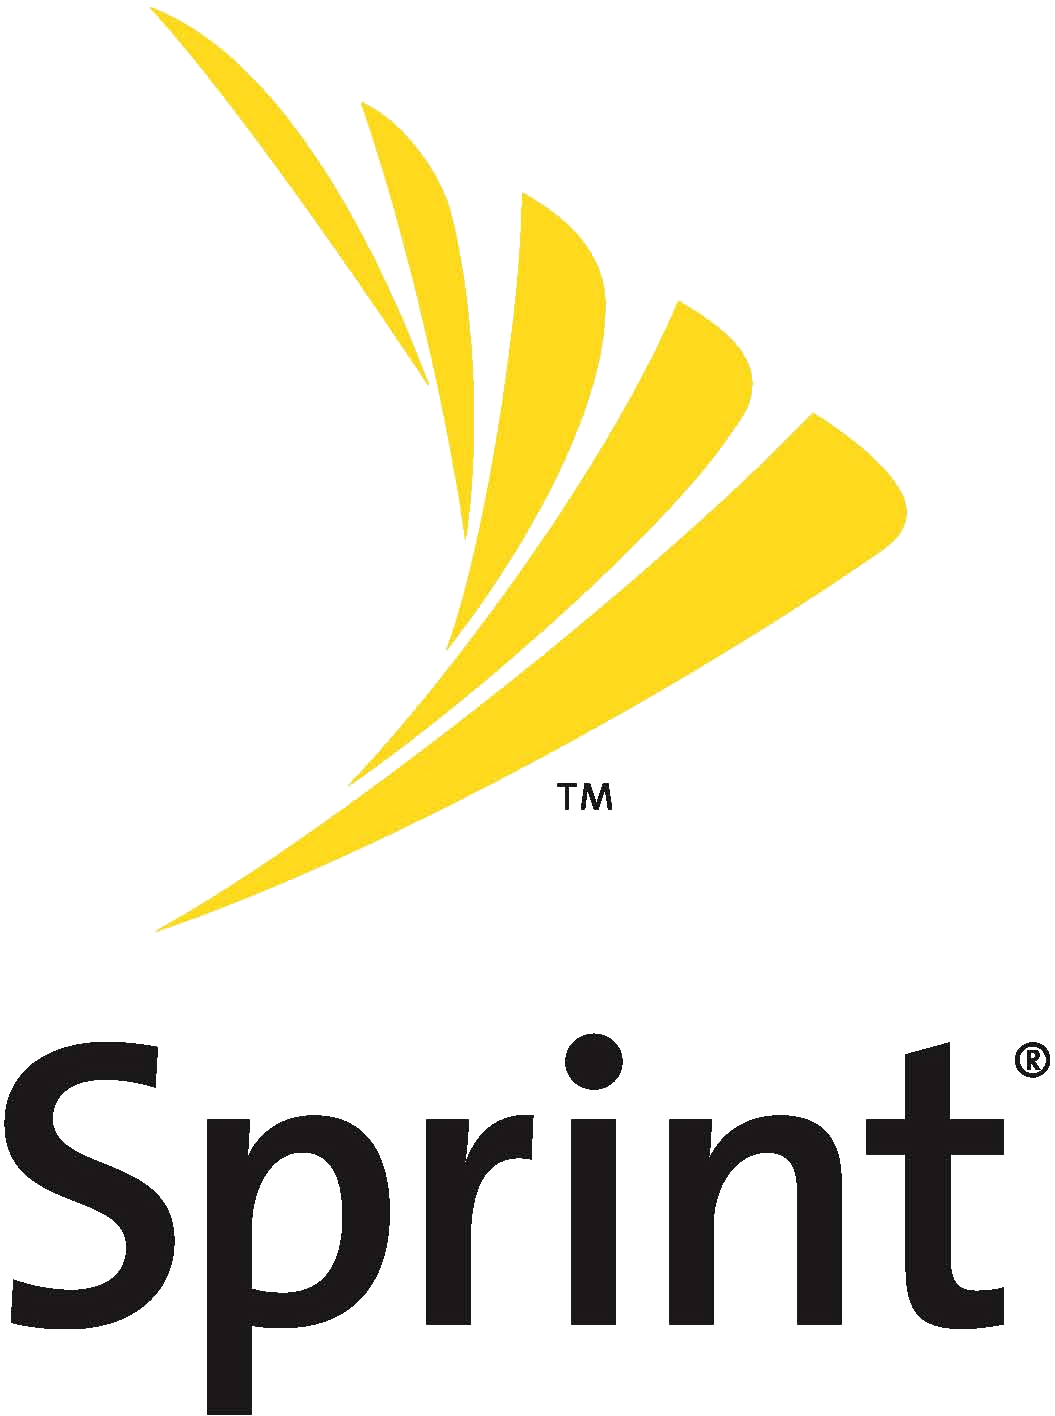 Sprint Almost Bought Metropcs [rumor] - Logo Sprint Png (1055x1416), Png Download